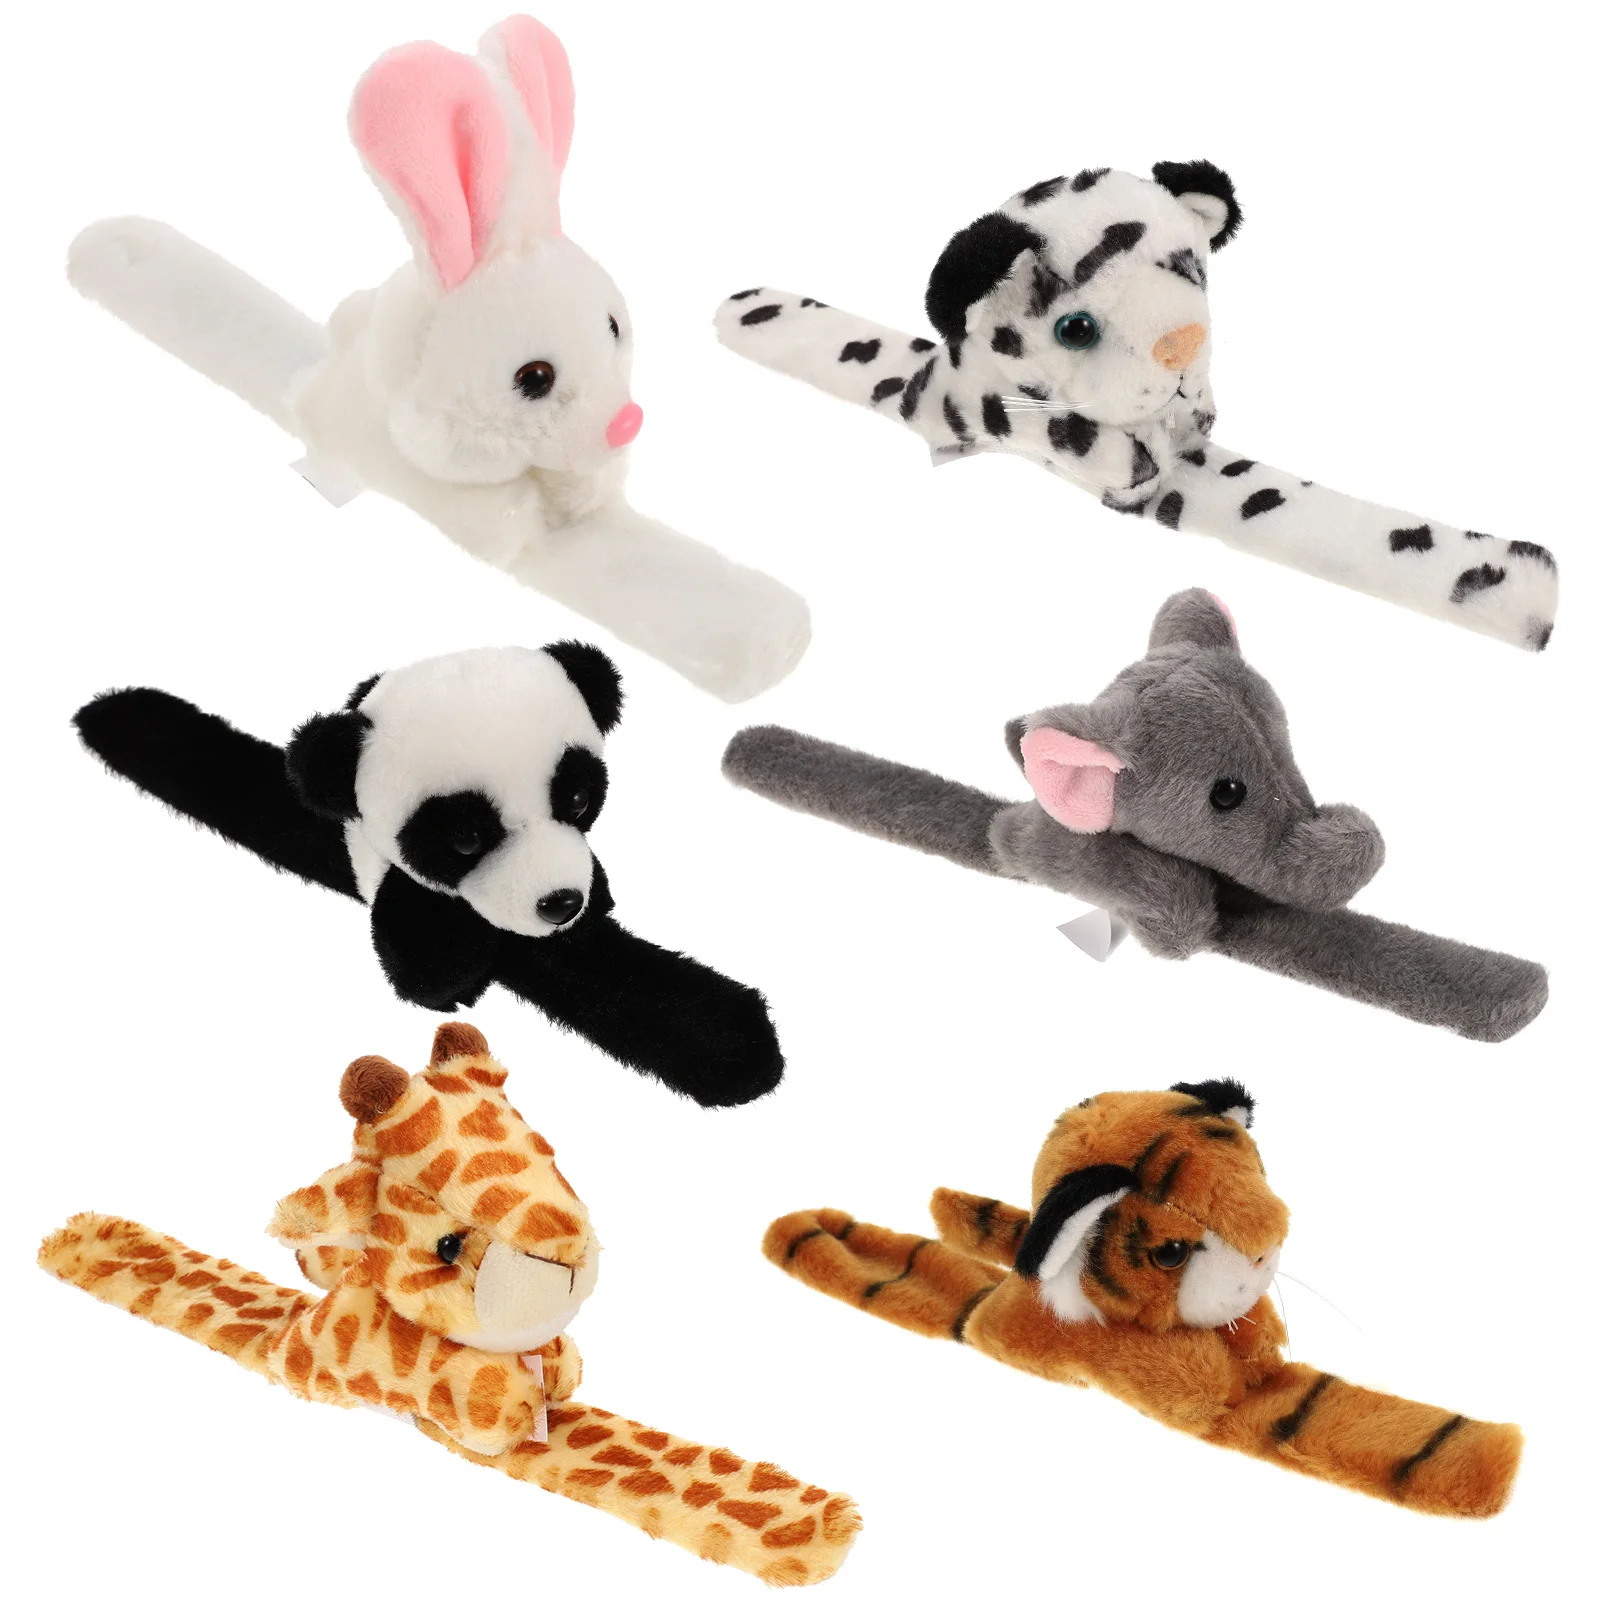 

Cartoon Animal Slap Bracelets Stuffed Plush Rabbit Tiger Panda Wristband Jungle Theme Slap Bands Kids Birthday Party Favors